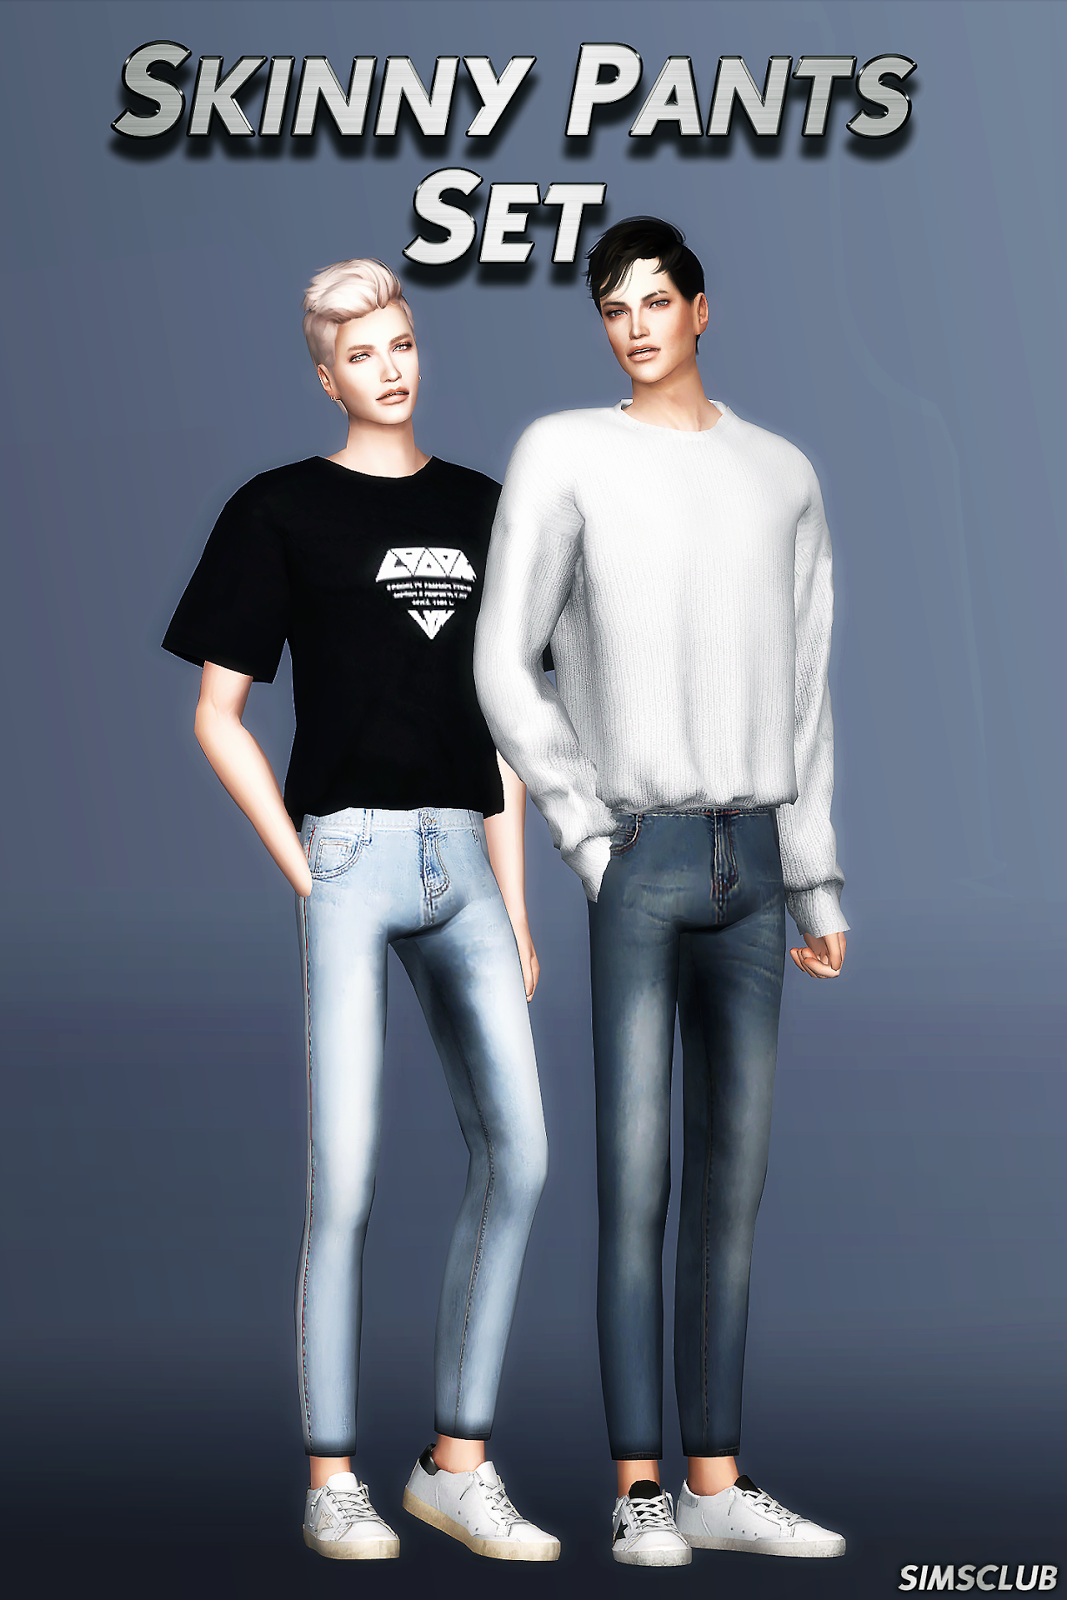 Sims 4 cc clothes - denverklo